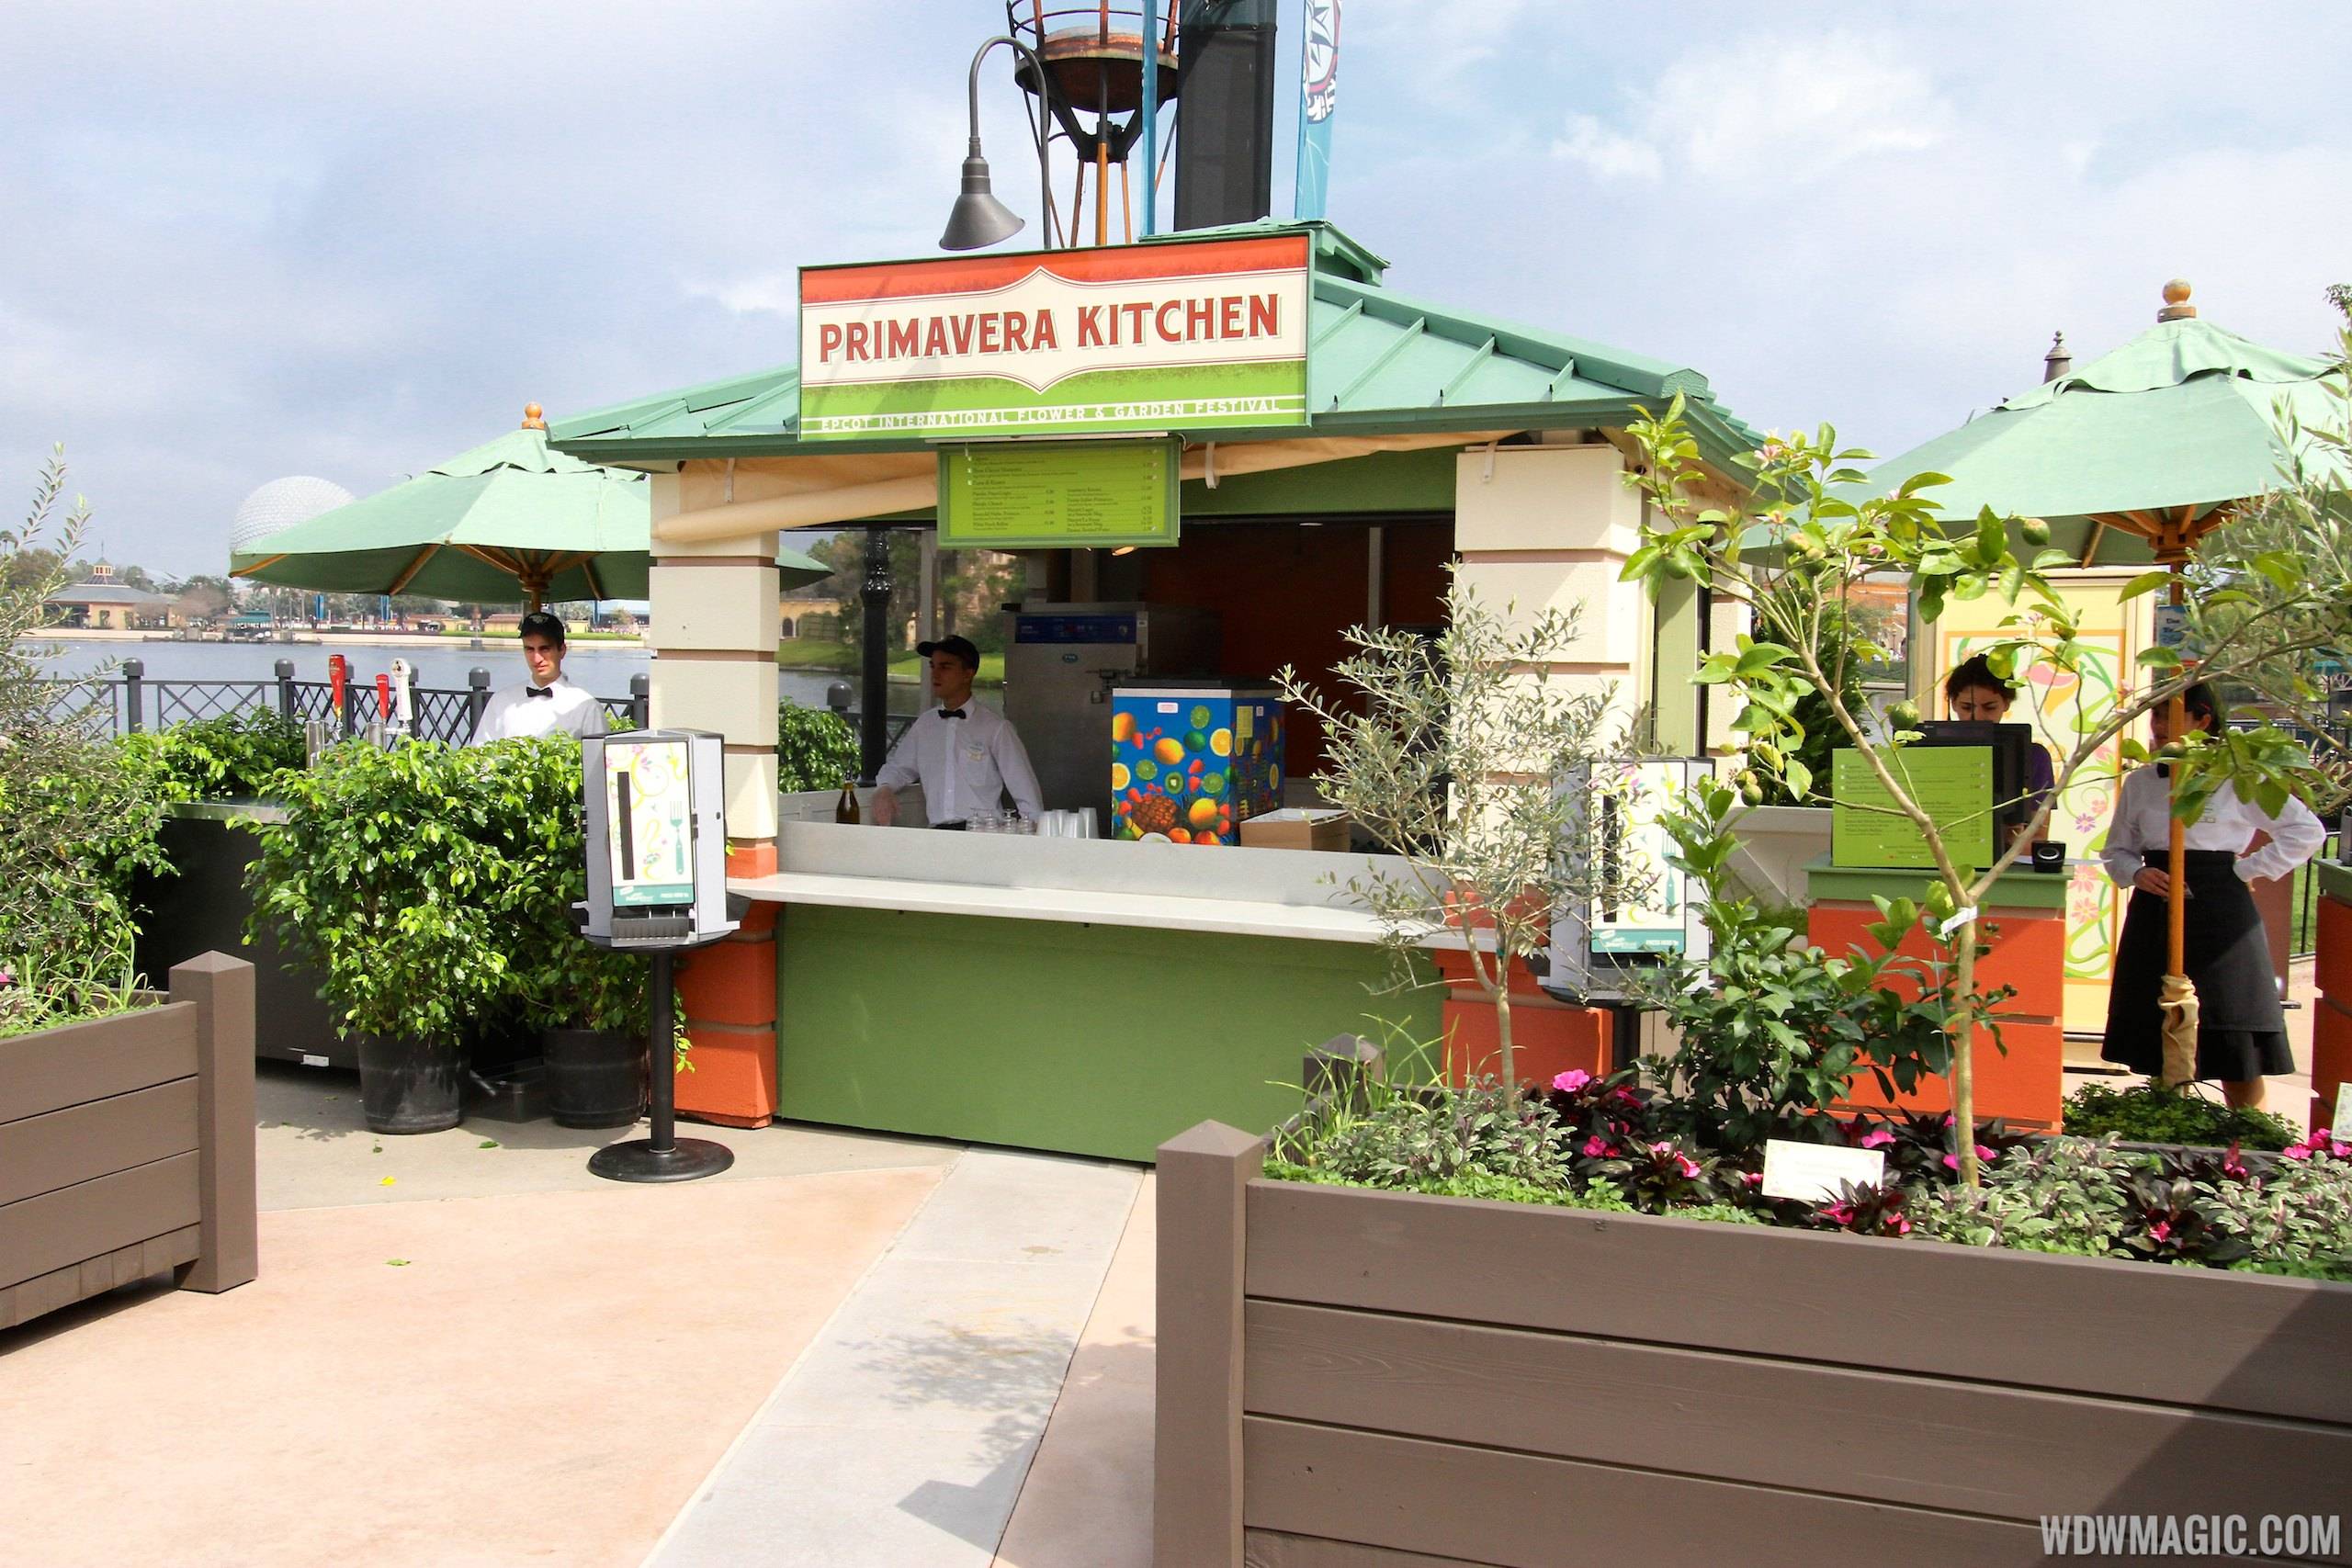 2014 Epcot Flower and Garden Festival Outdoor Kitchen kiosks - Primavera Kitchen kiosk